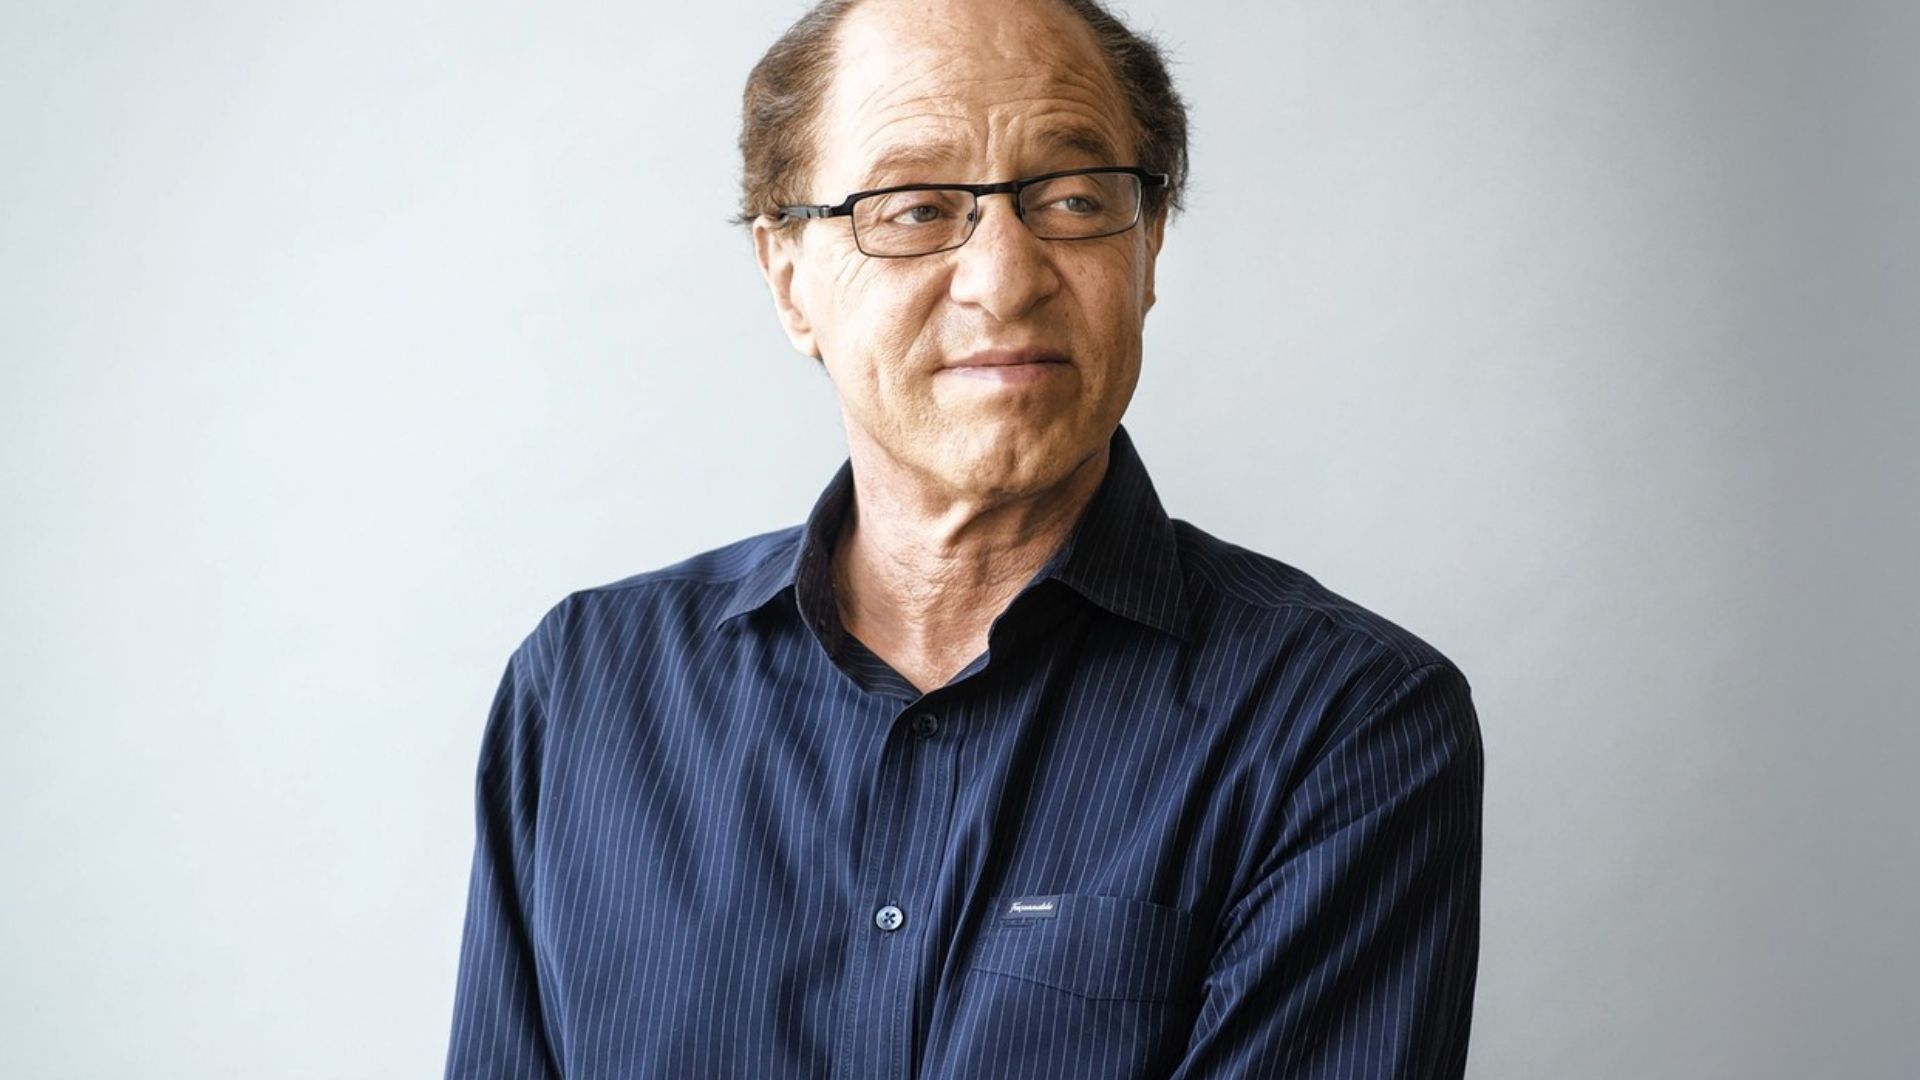 Raymond Kurzweil Wearing Blue Shirt and EyeGlasses